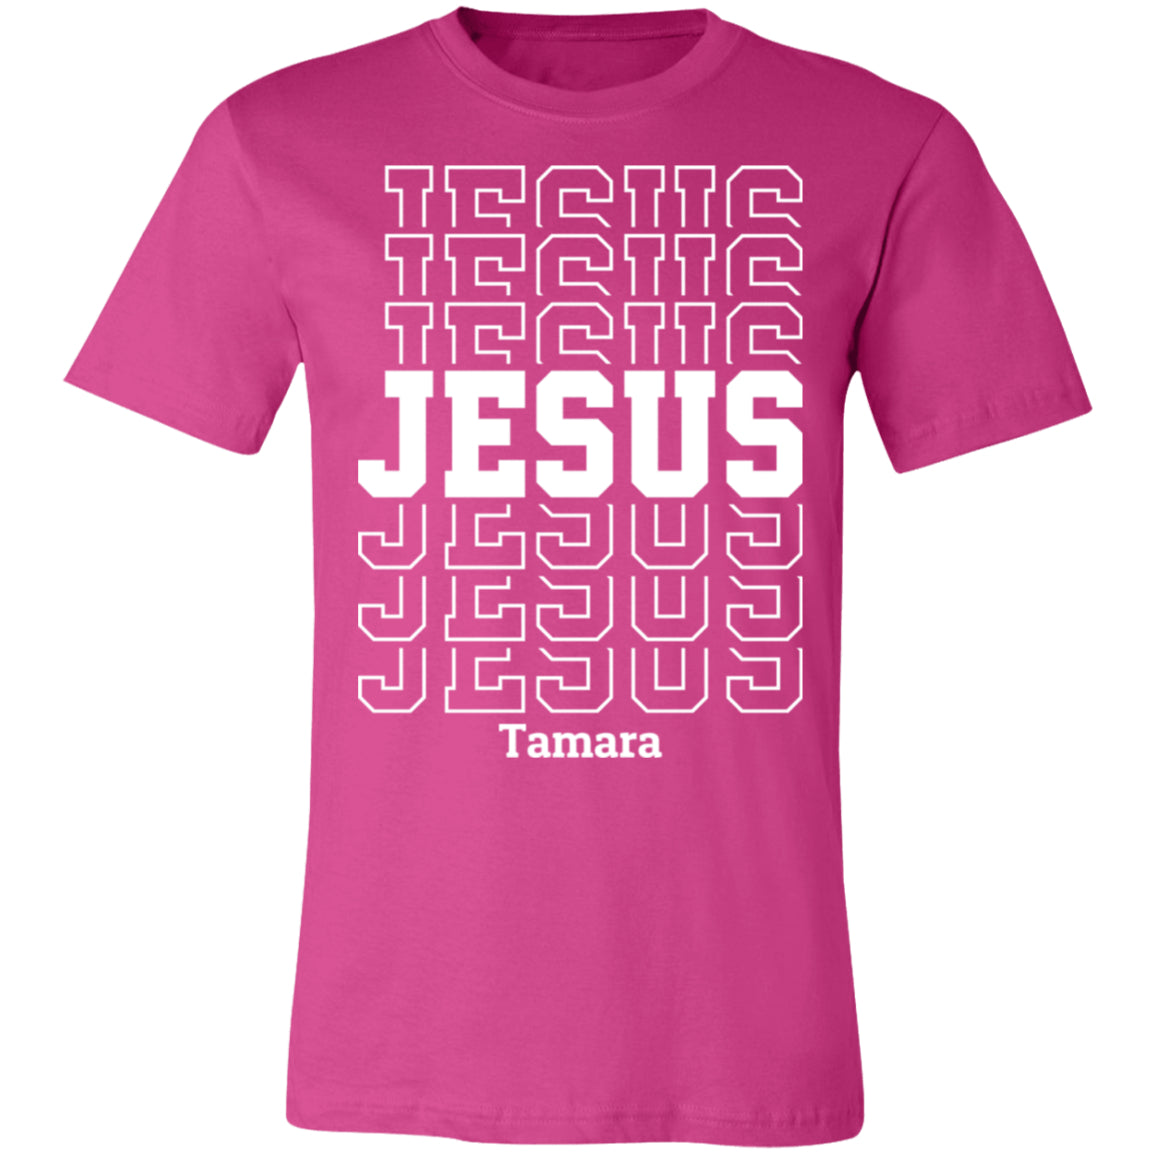 T-Shirts - Personalized Christian Themed T-shirts - Jesus.01